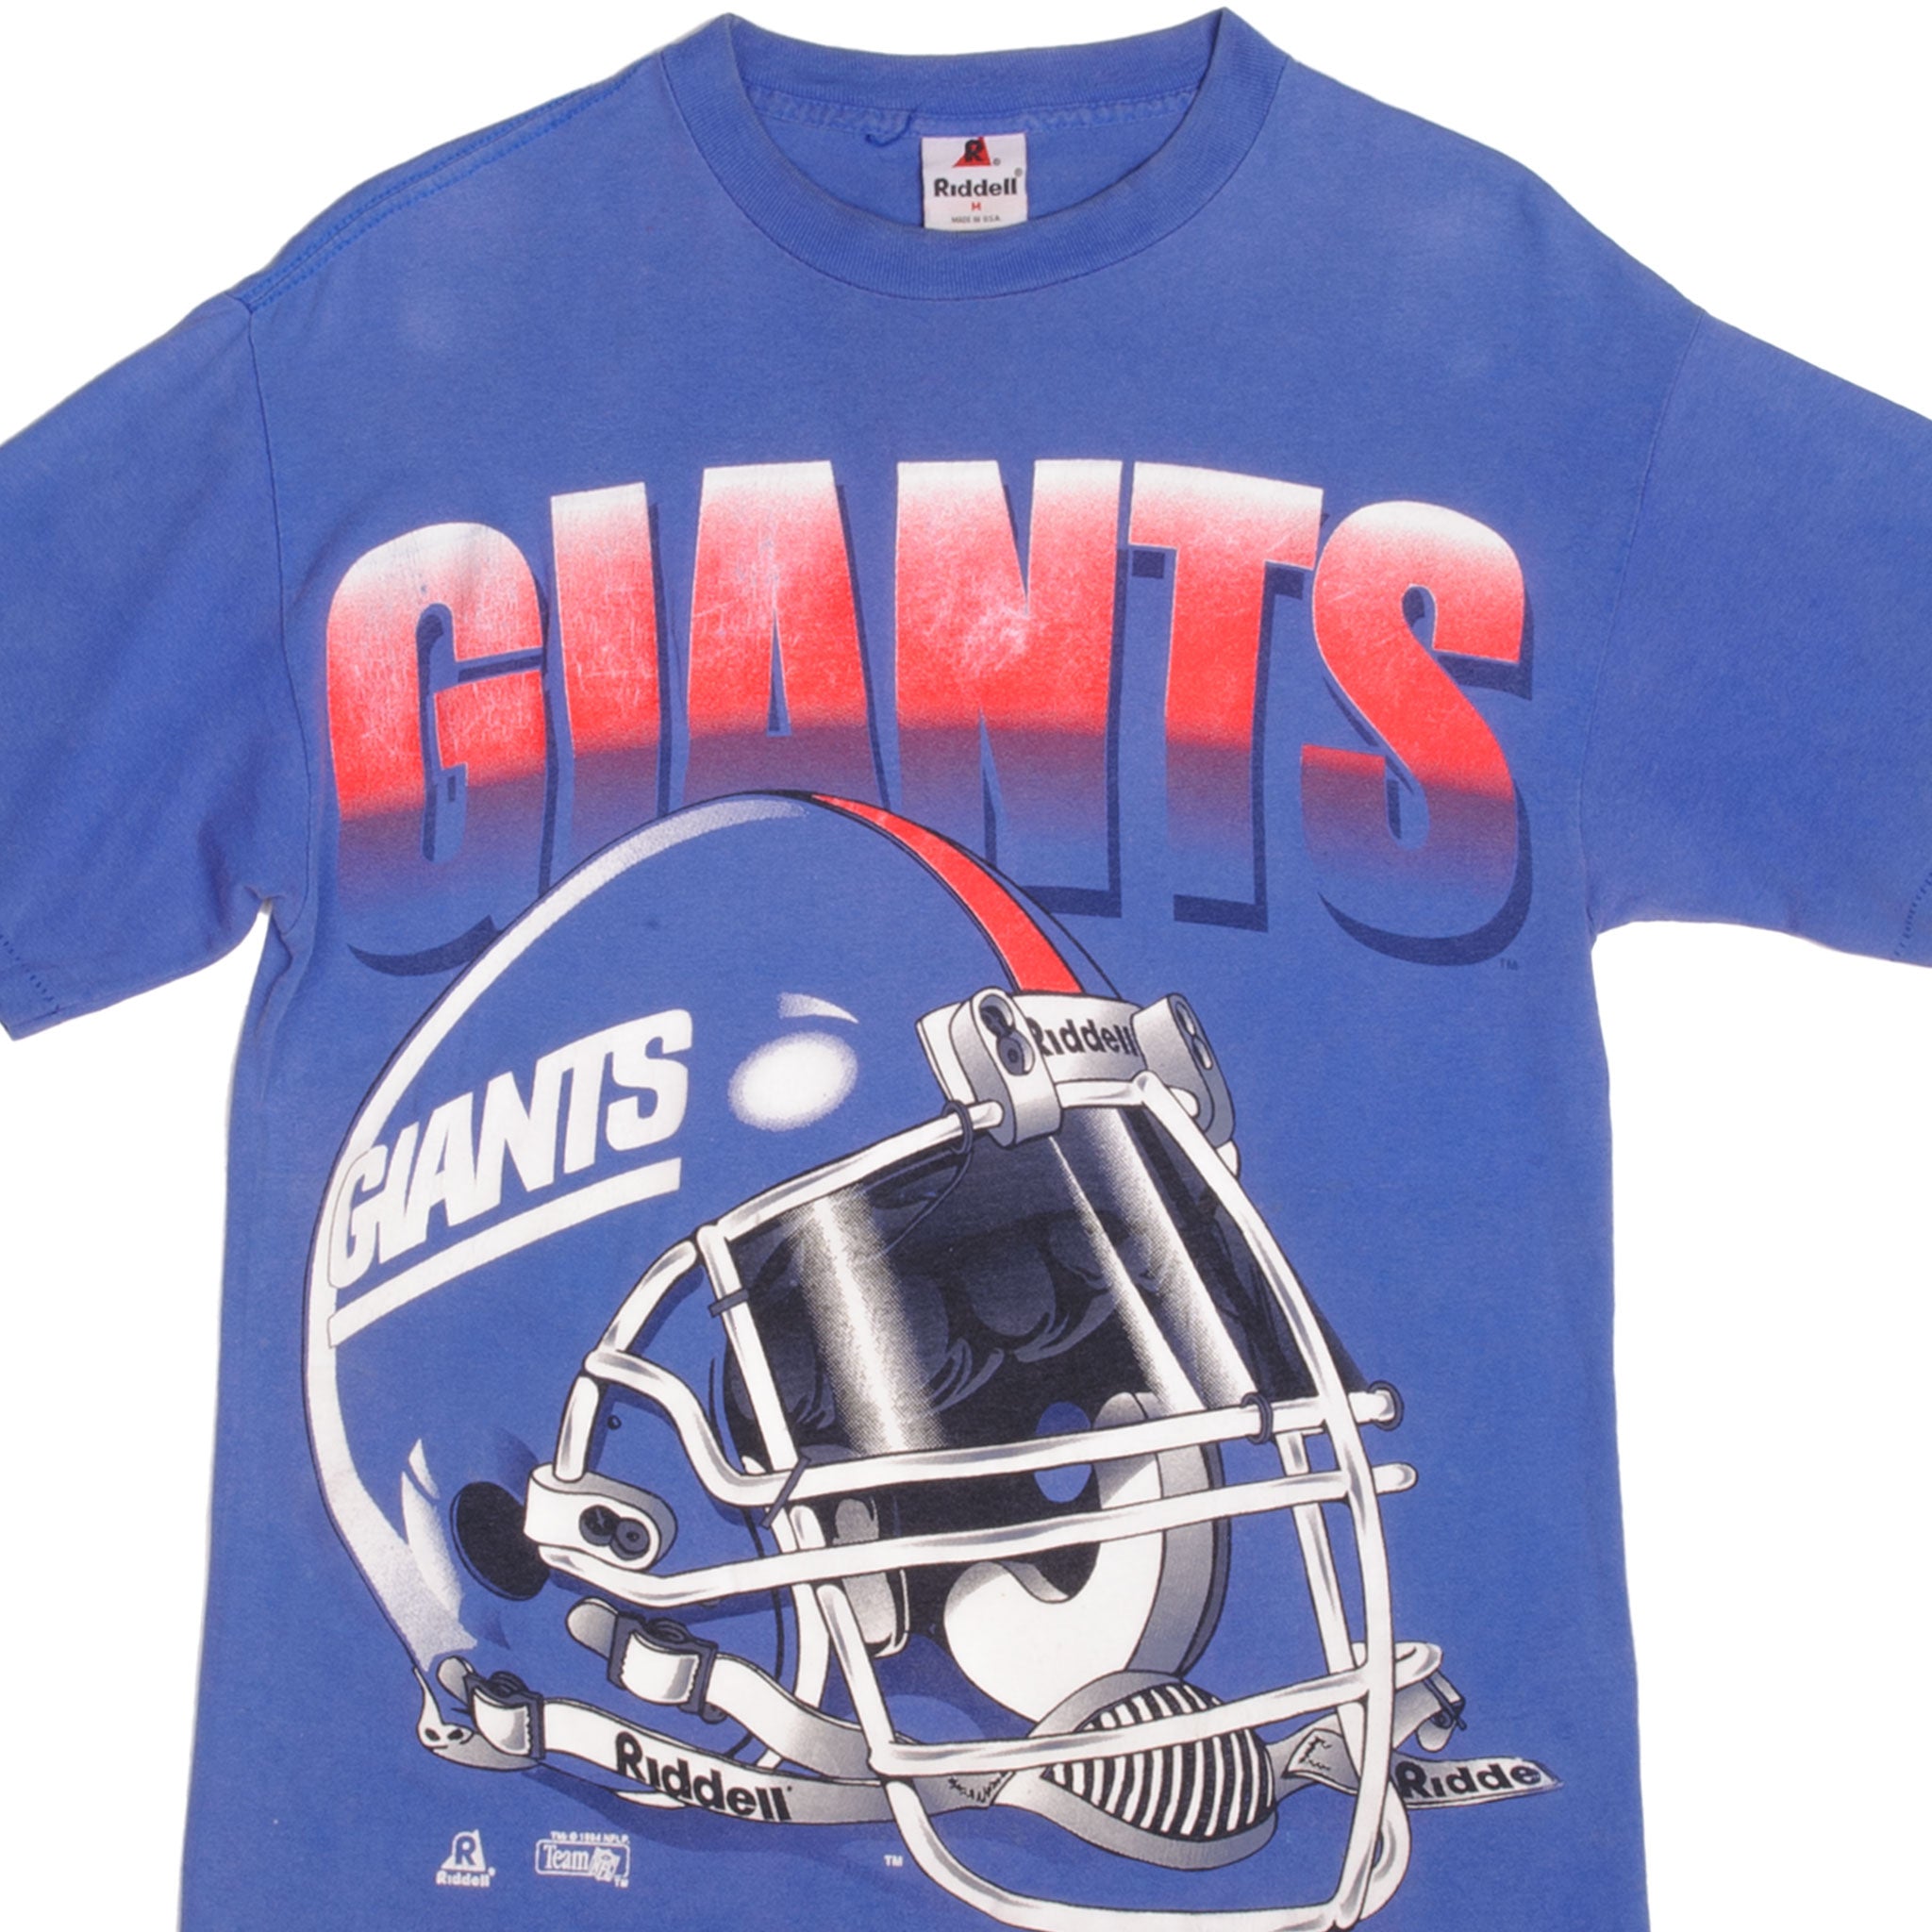 Vintage NFL NY Giants Tee Shirt 1991 Size Medium Made in USA